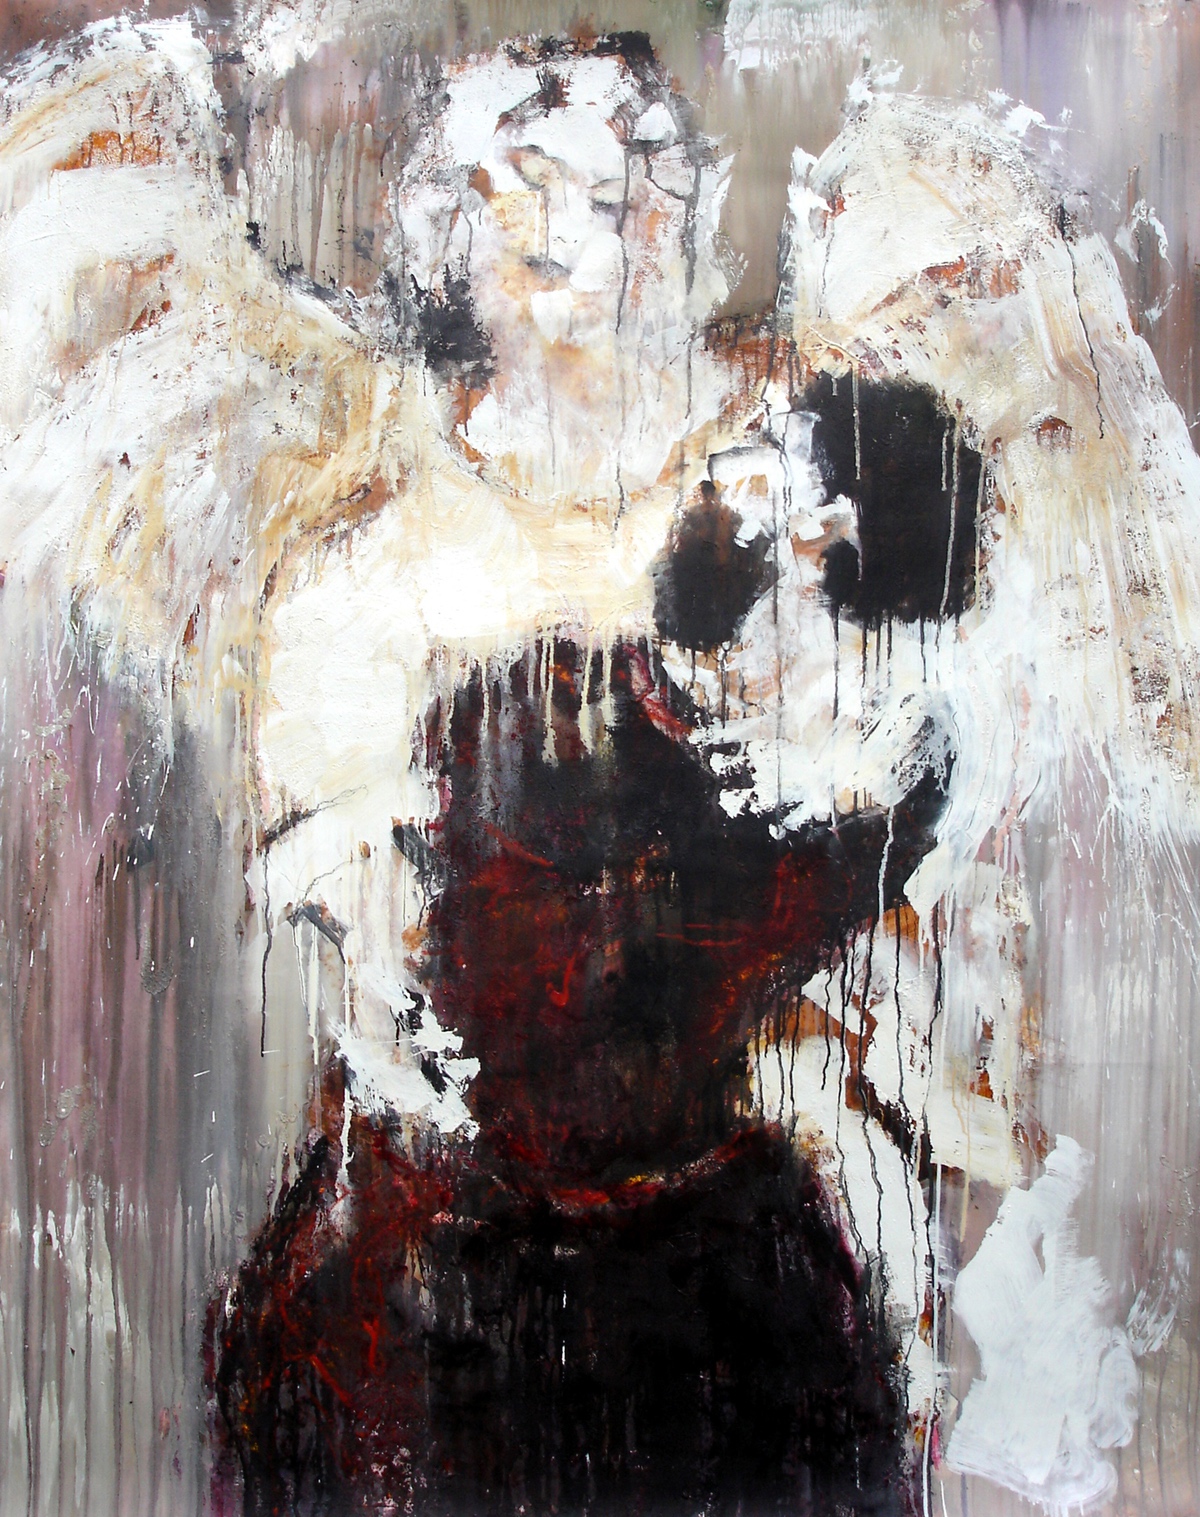 “Jakobs kamp med englen”, 2005, 162 x 130 cm. Acryl, olie og sand på lærred. (Carsten Frank nr. 1080) Sold